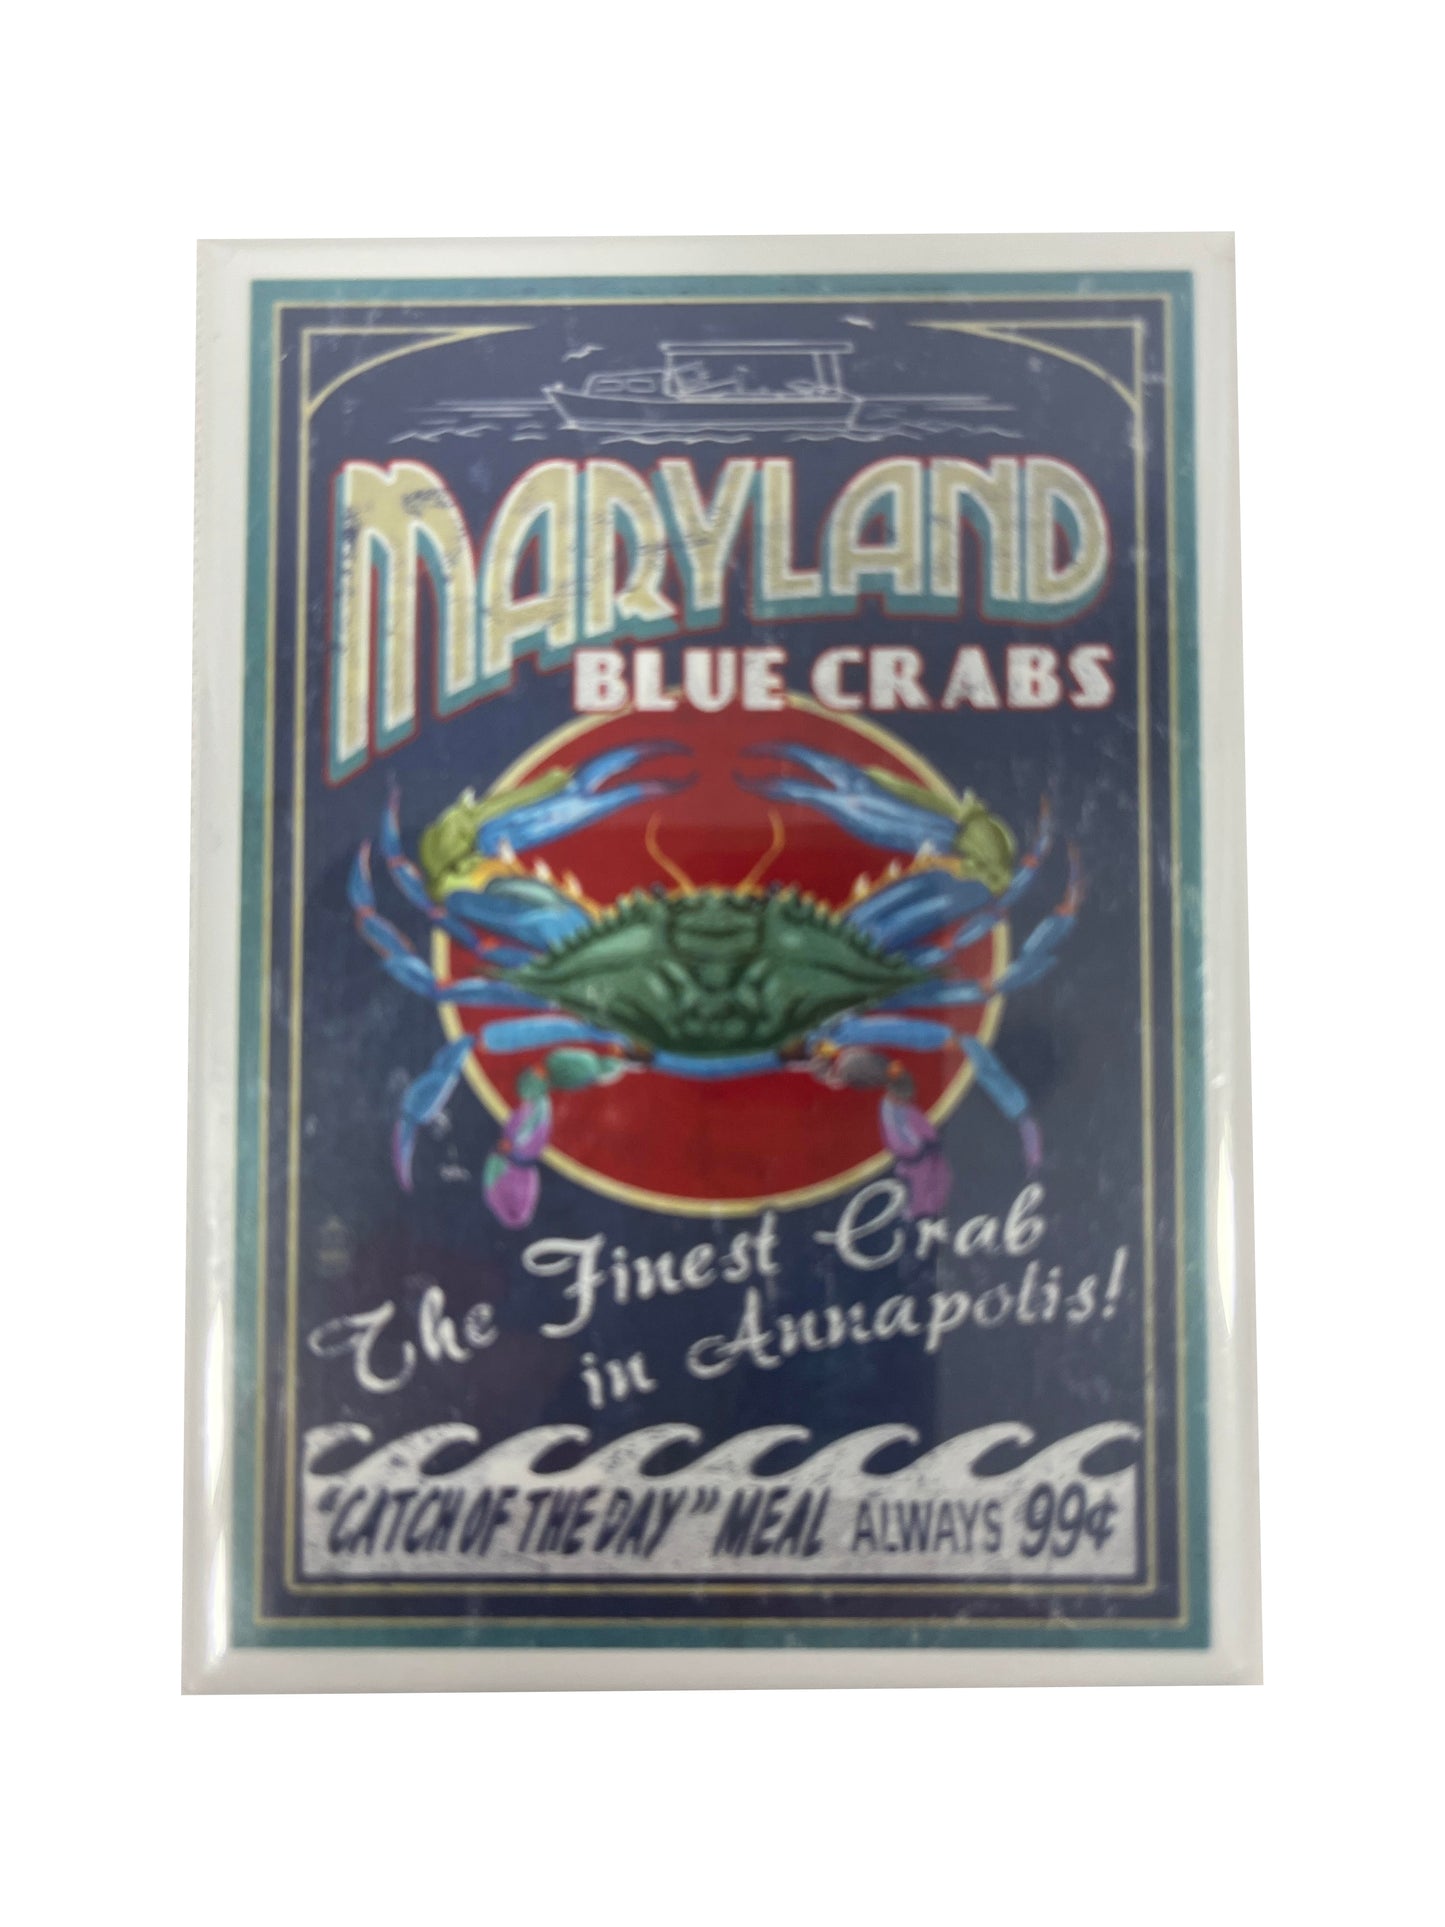 Maryland "Blue Crabs" Magnet